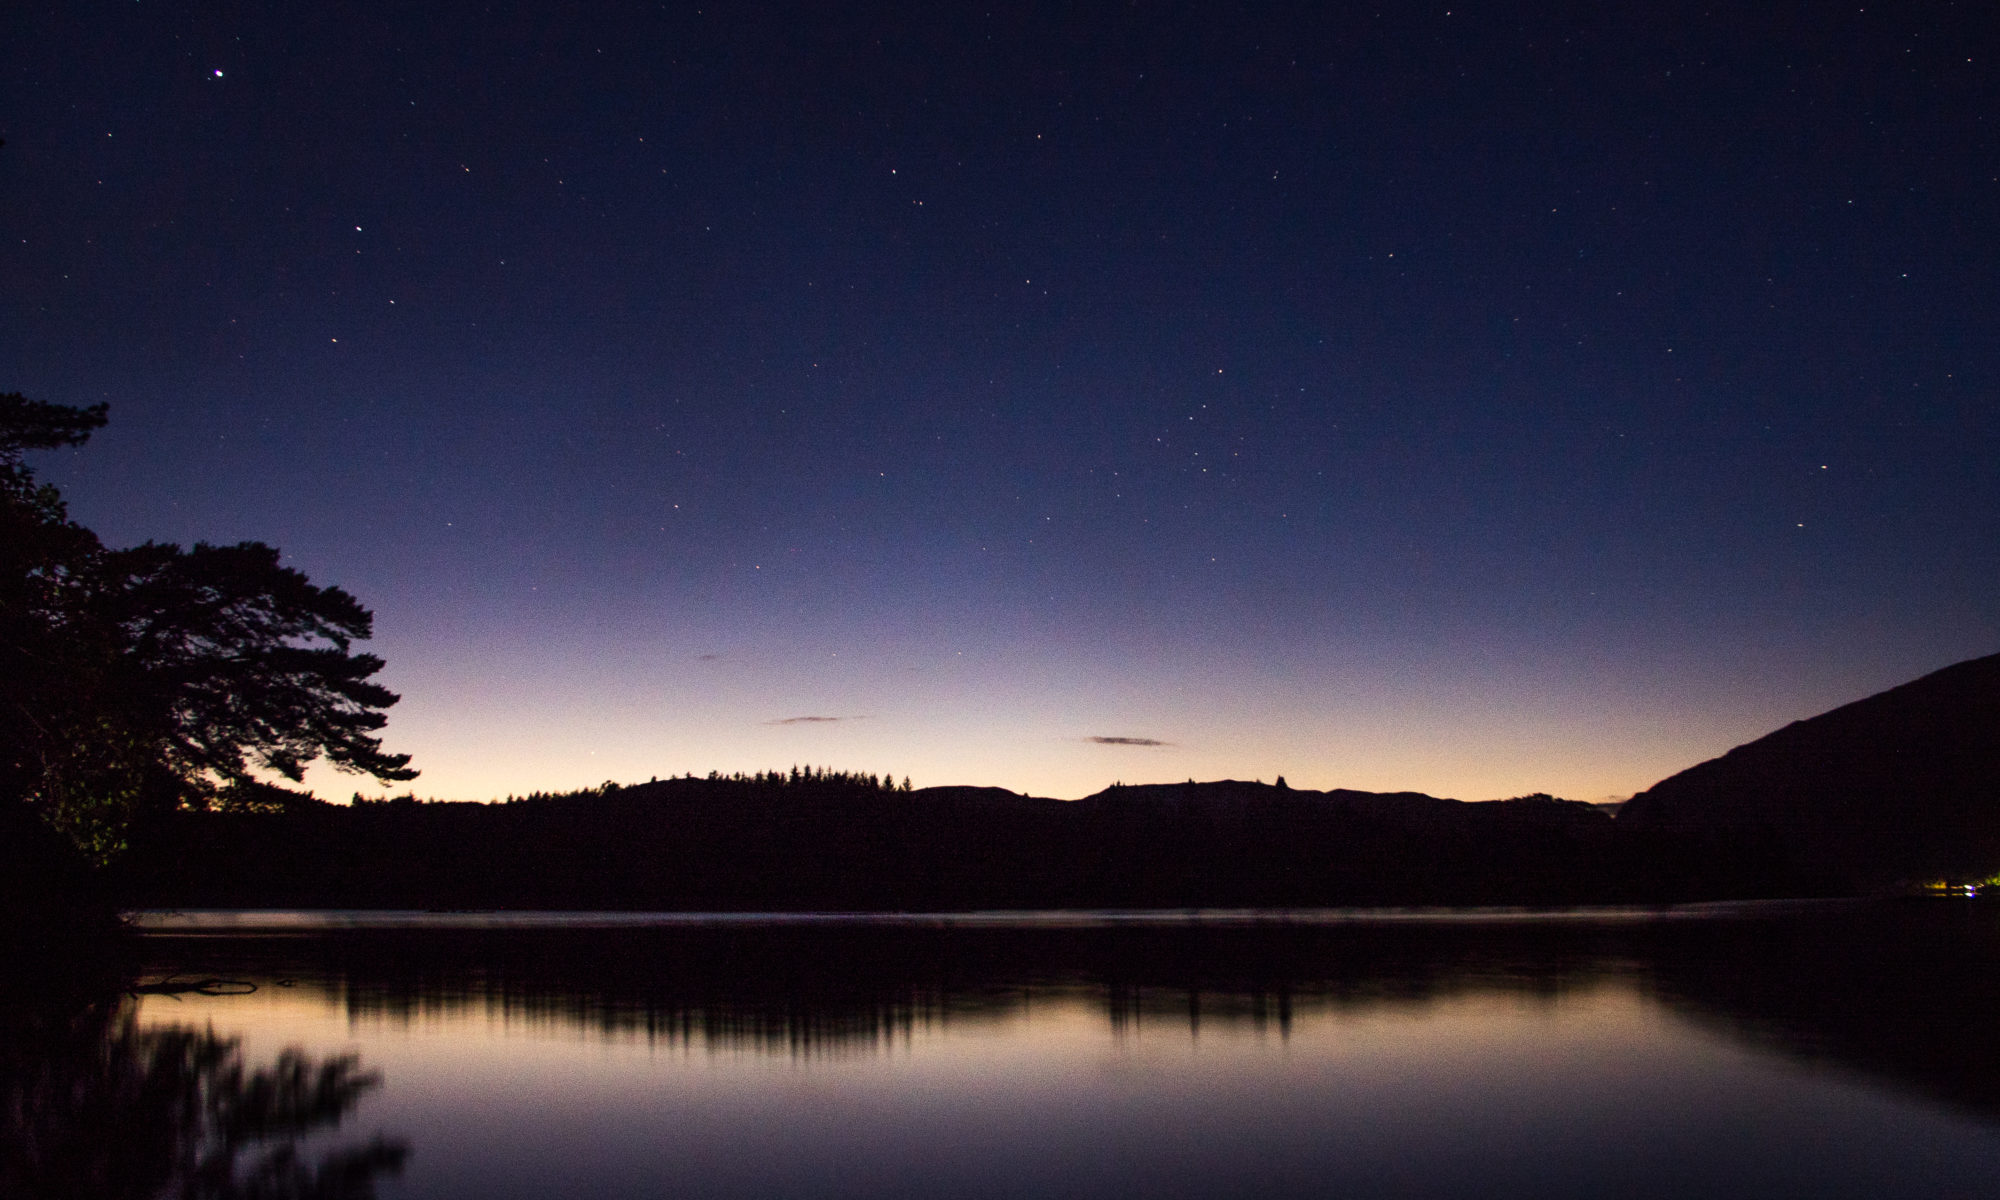 Loch Awe at night